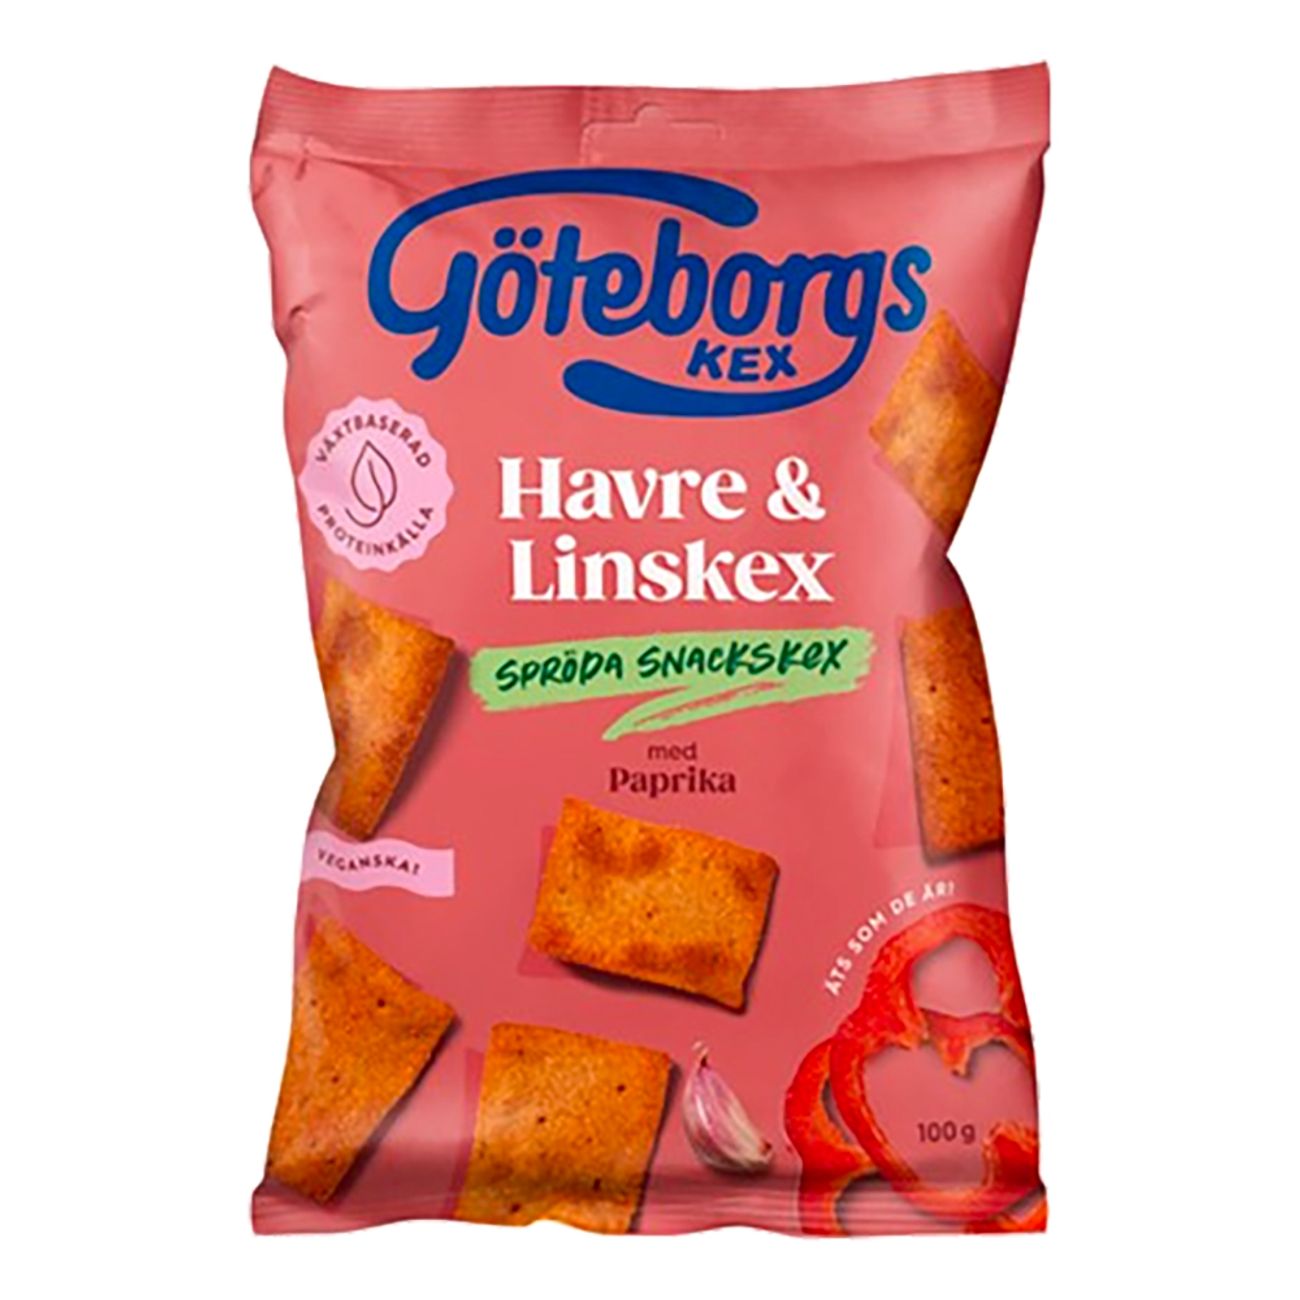 goteborgs-kex-havre-linskex-paprika-88754-1